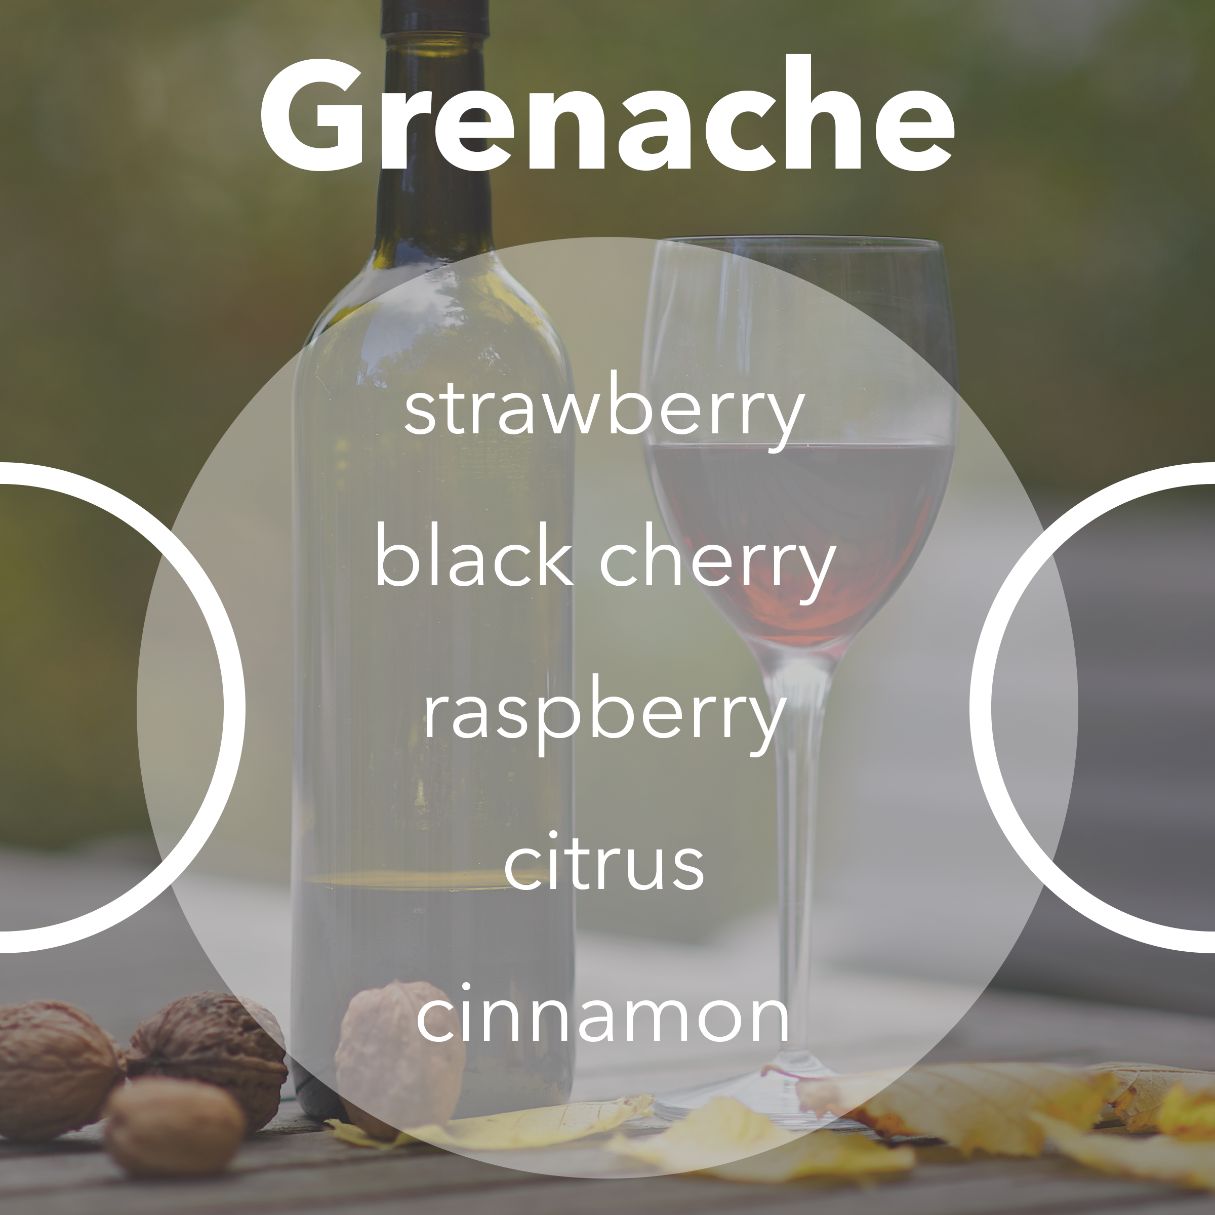 Grenache wine tasting notes.